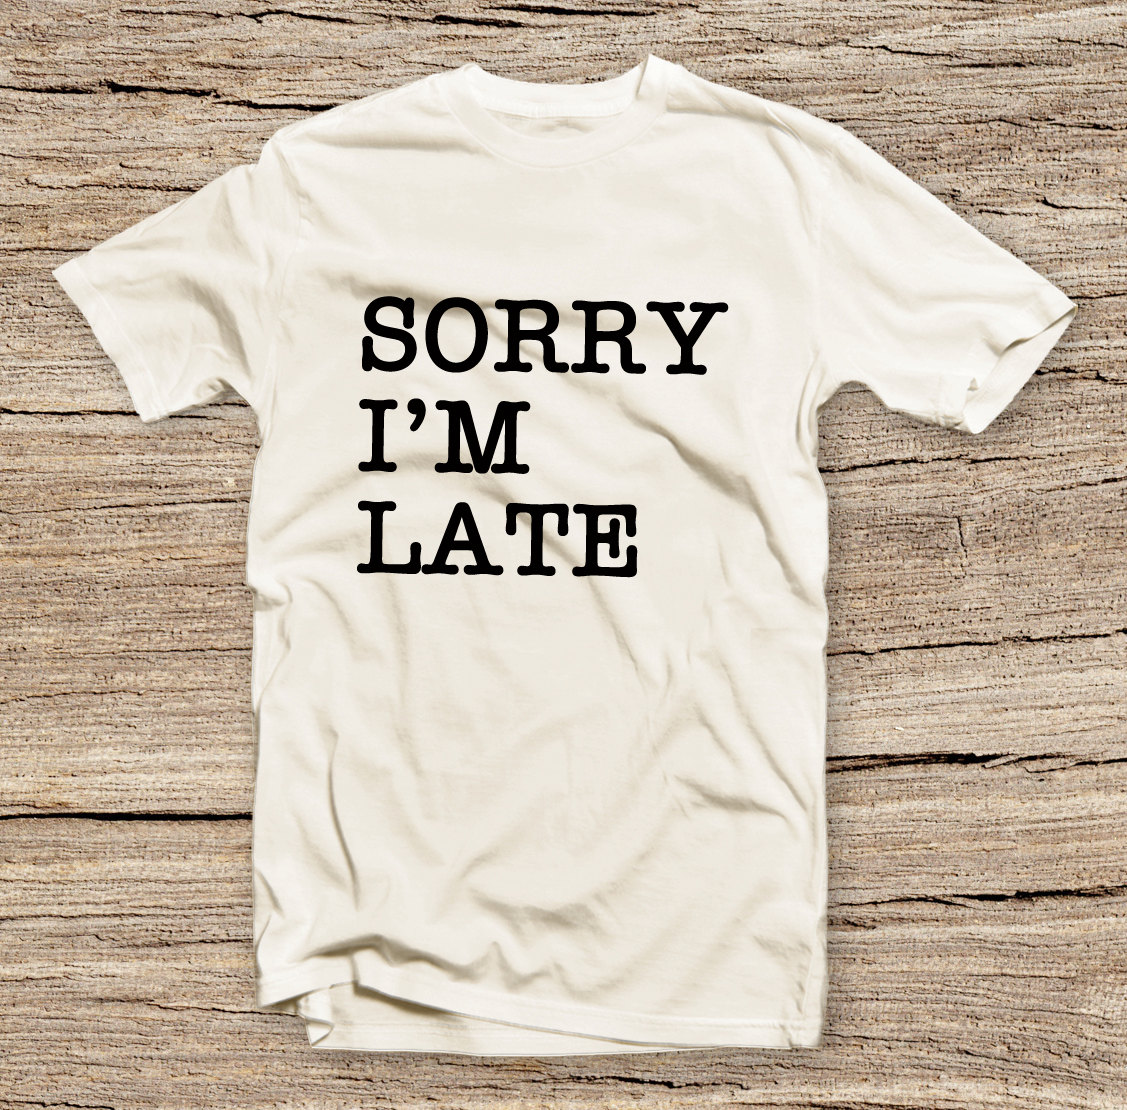 Pts-118 Sorry I'm Late Style T-shirt, Text Slogan, Funny Humor T-shirt, Unisex Tee, Fashion Printed T-shirt